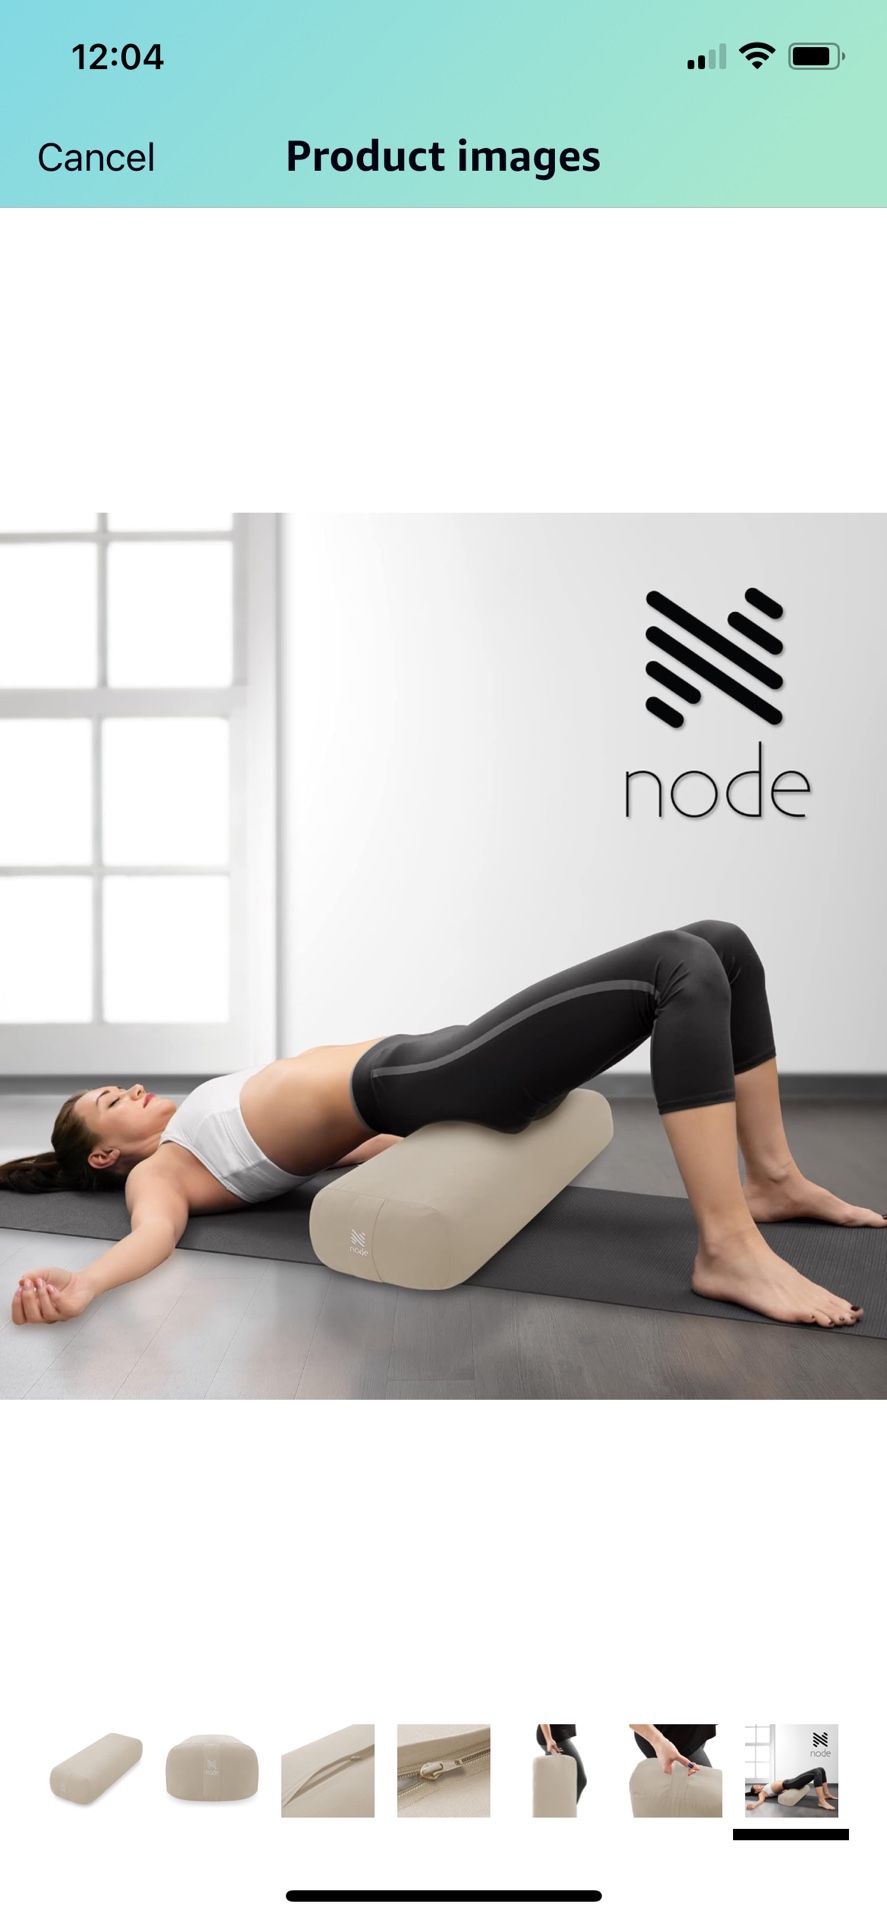 Node Fitness Yoga Meditation Cushion, 25" x 12" Rectangular Bolster with Organic Cotton Cover